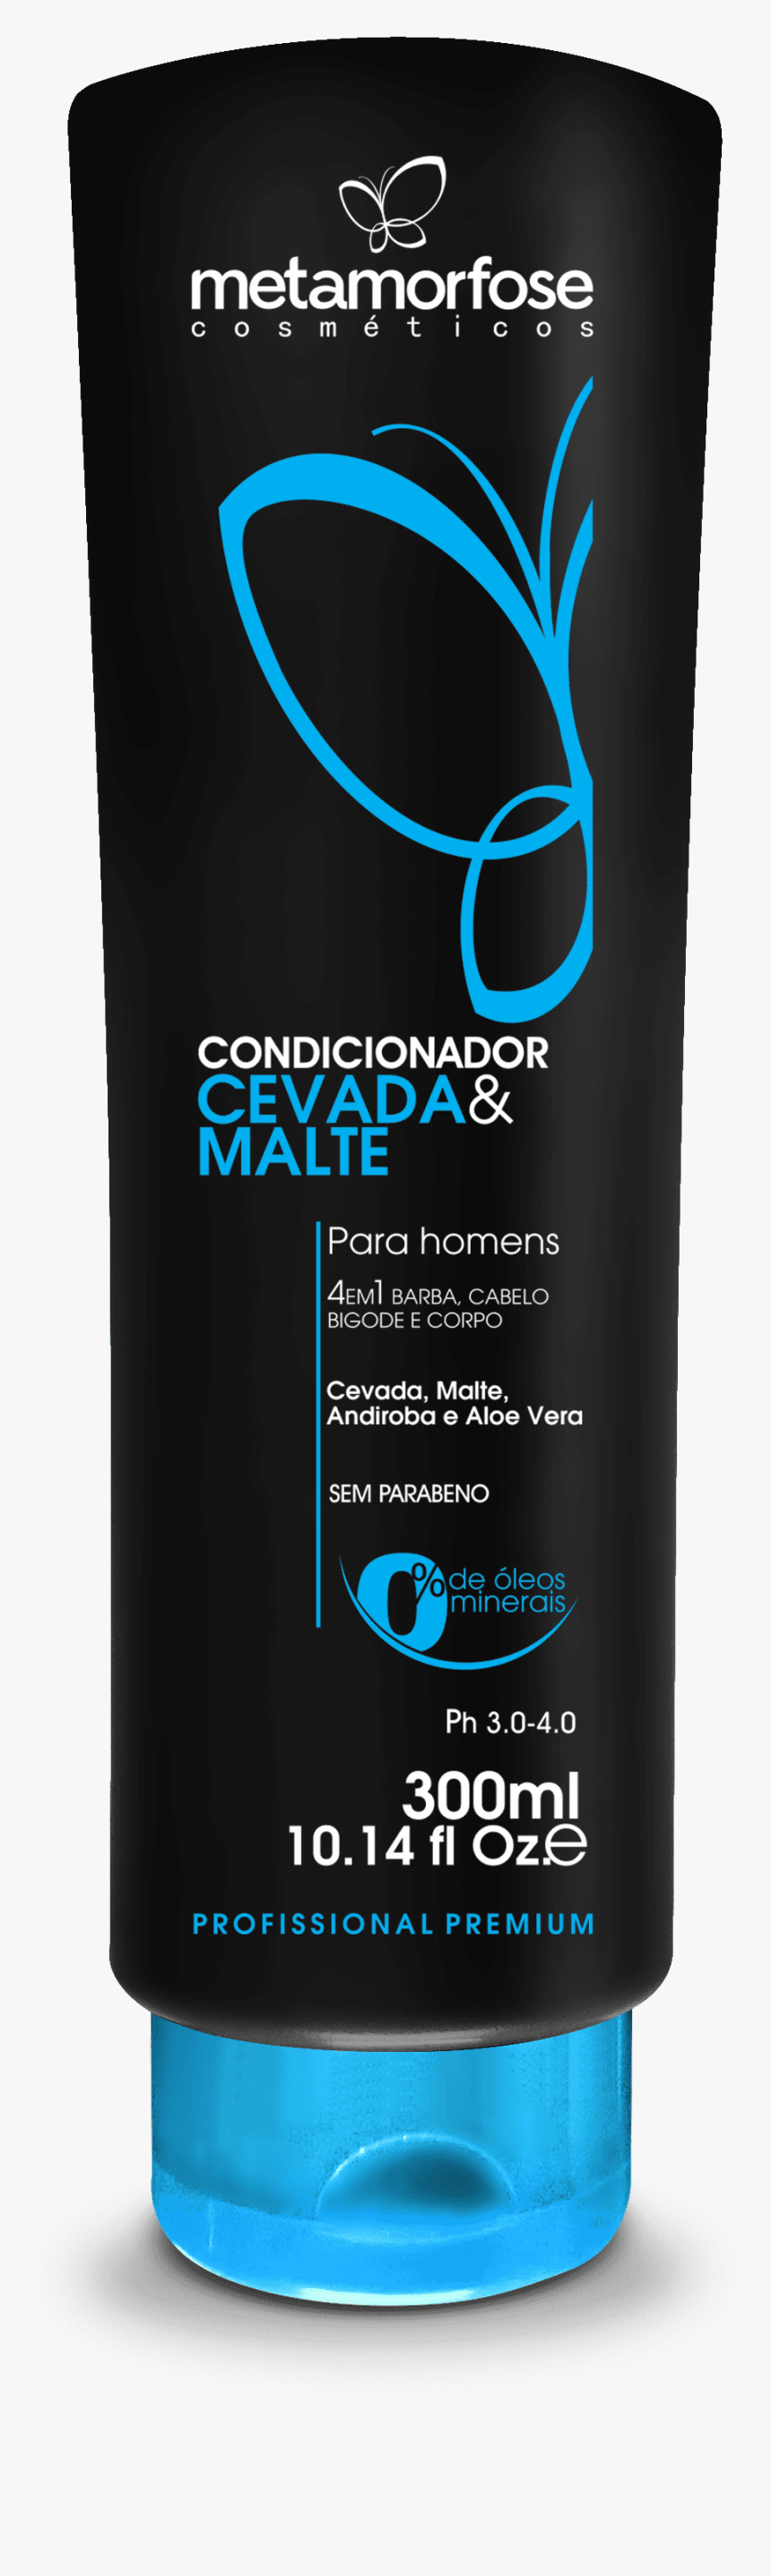 Condicionador Cevada & Malte - Metamorfose Cevada E Malte Png, Transparent Png, Free Download